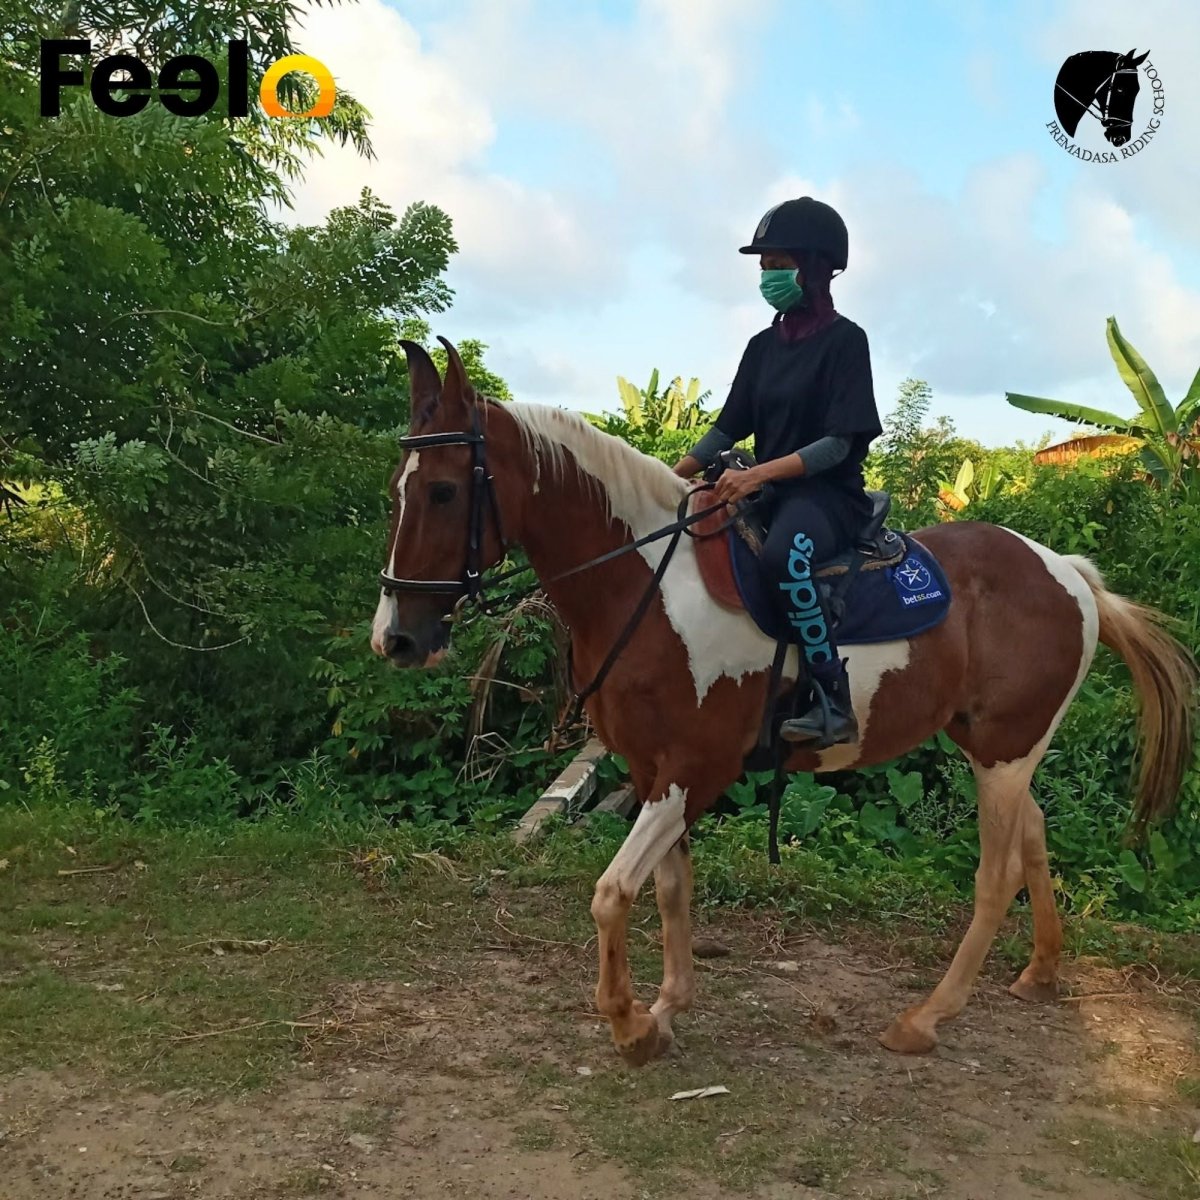 20 min, 40 min or 60 min Guided Horse Riding (laps) around a pleasing lake view - Premadasa Riding School, Nugegoda | Feelo